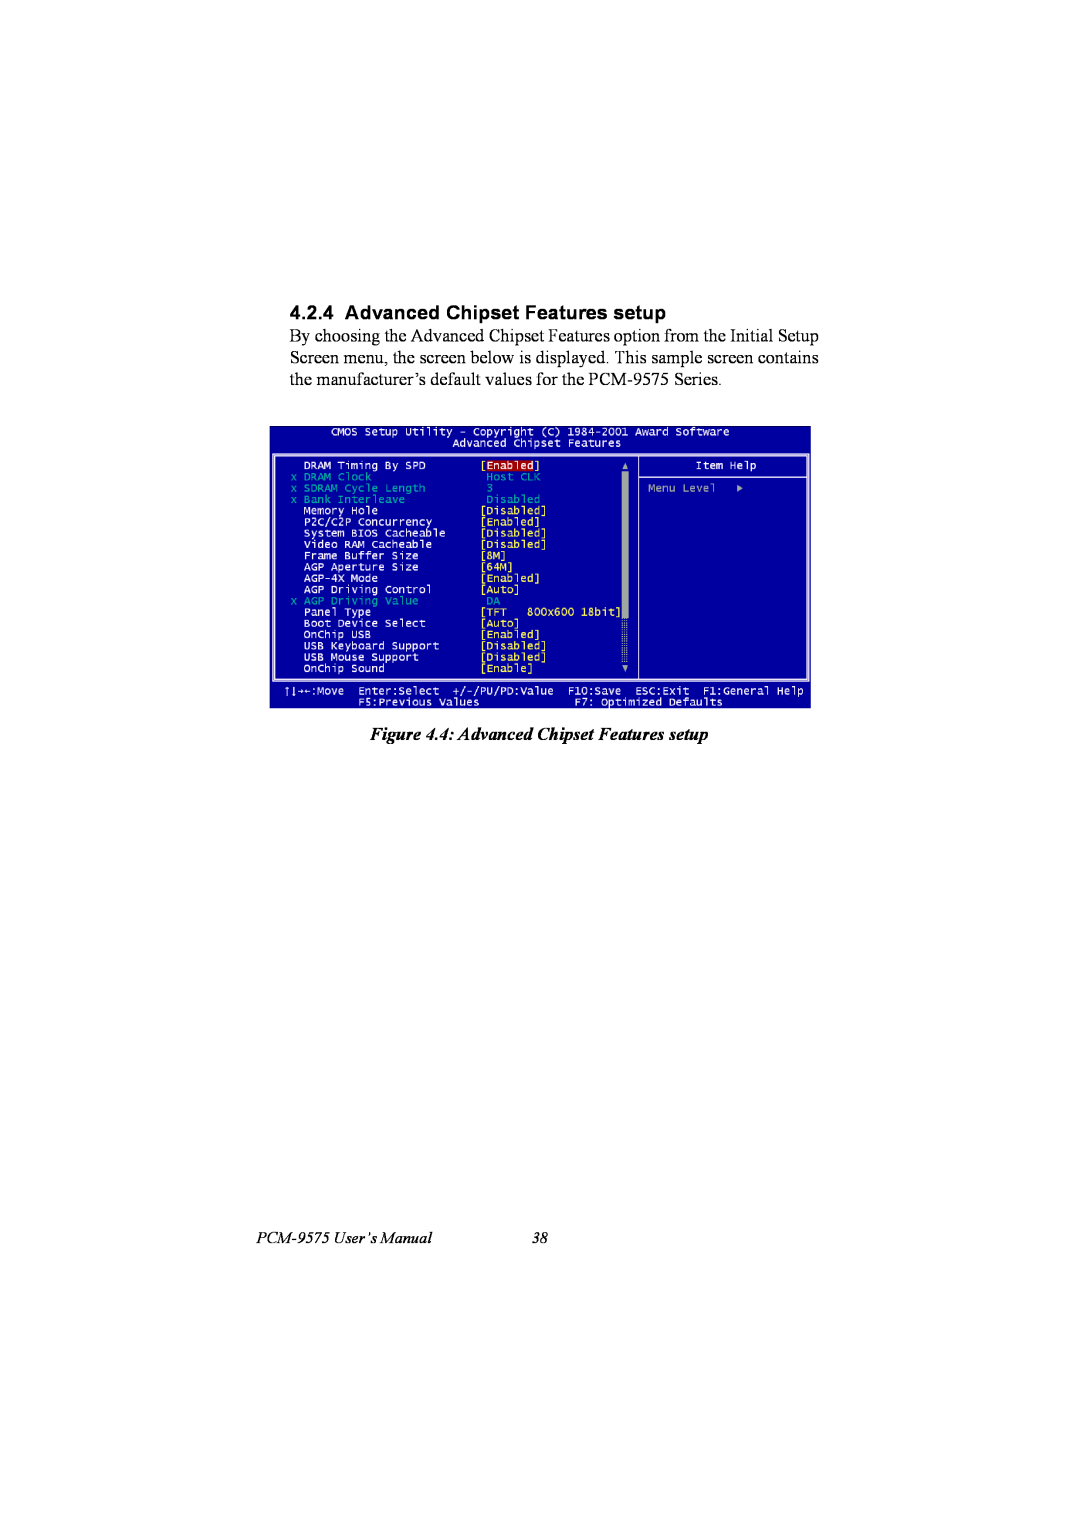 IBM 100/10 user manual 4 Advanced Chipset Features setup, PCM-9575 User’s Manual 